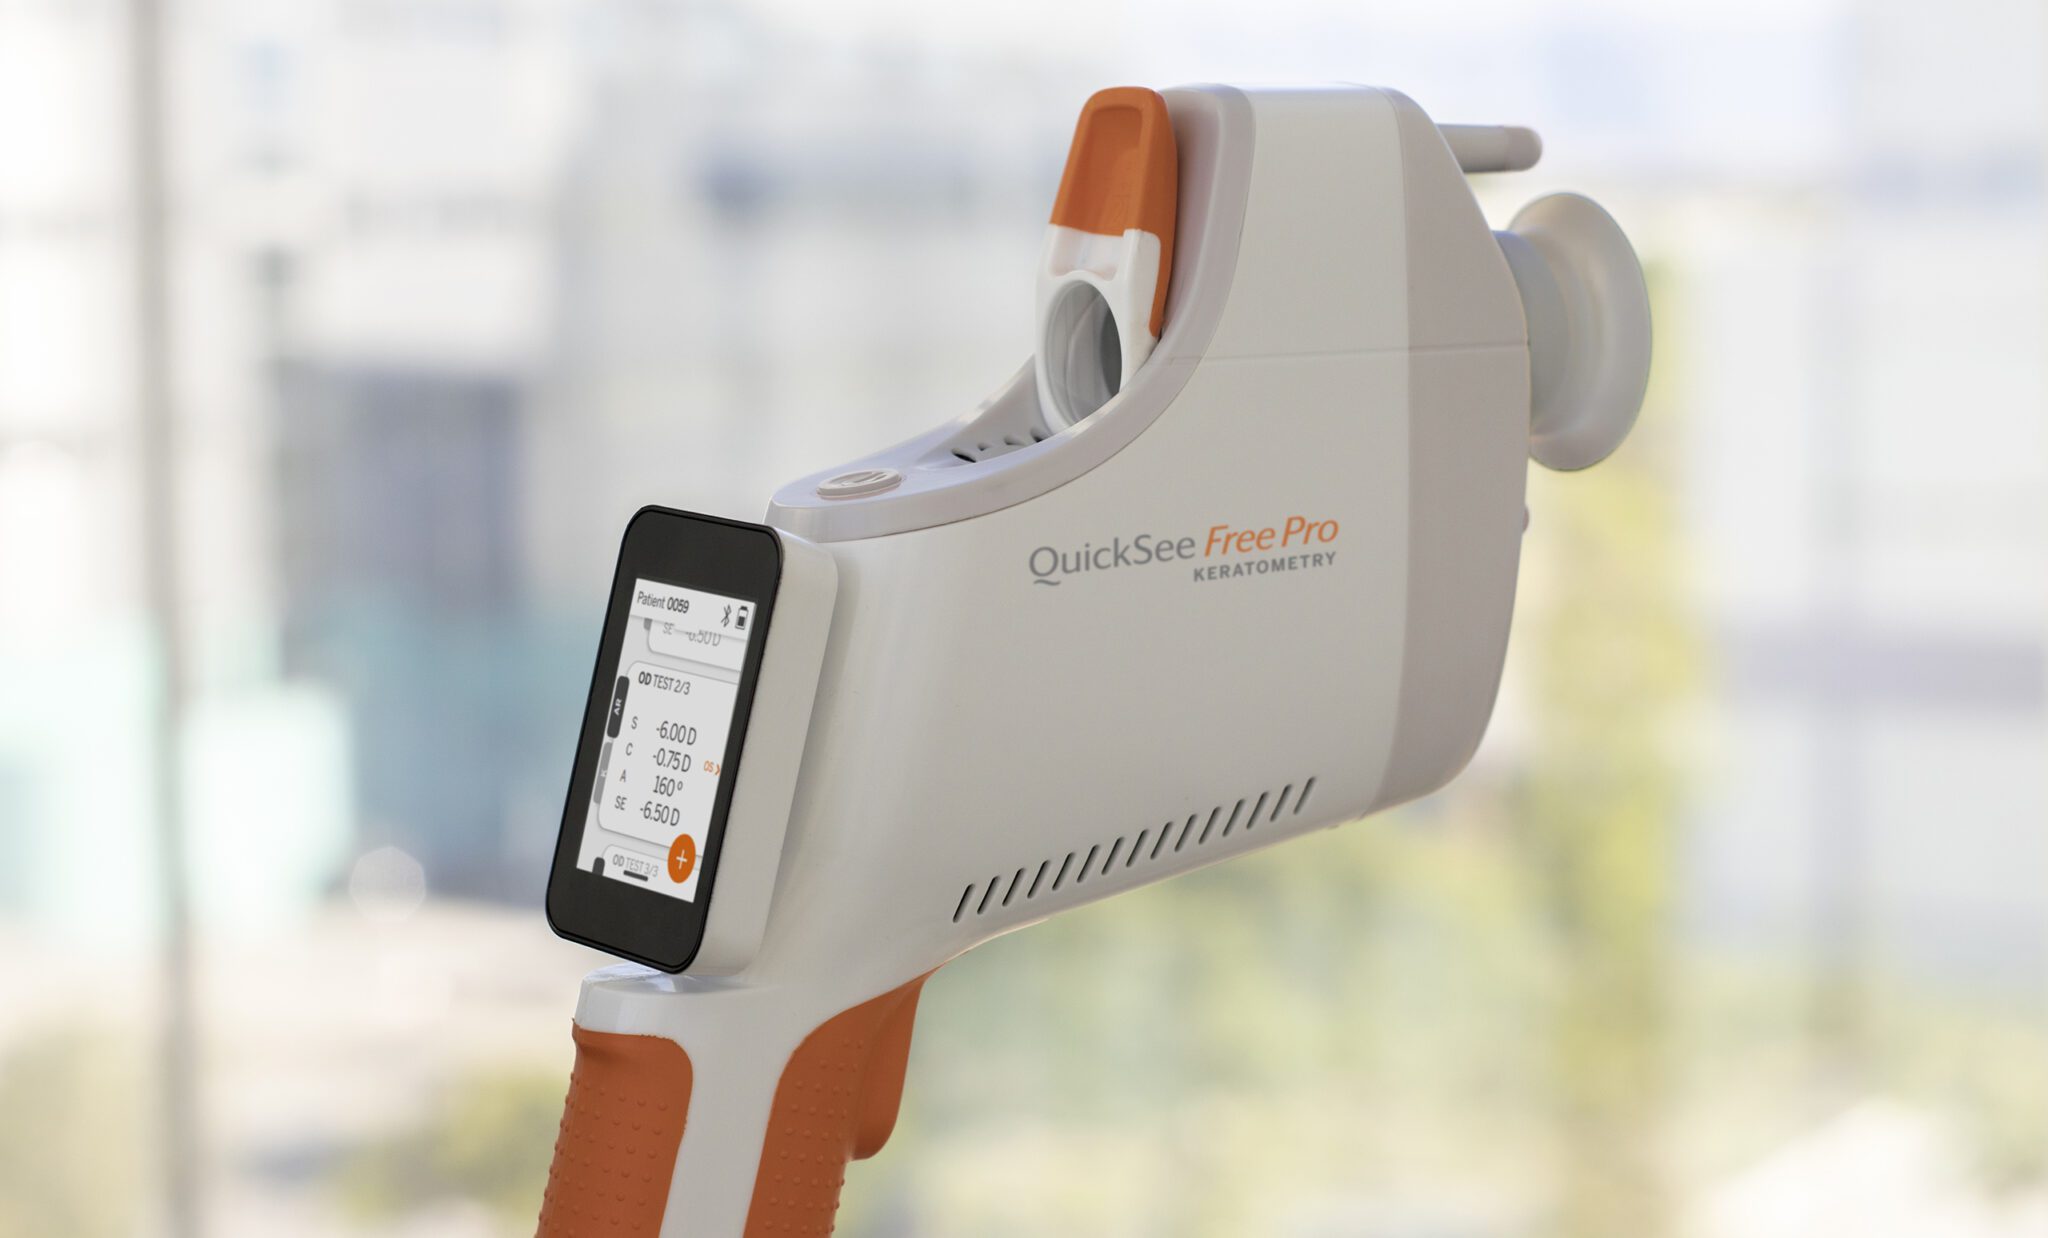 QuickSee Free Pro handheld autorefractor with keratometry